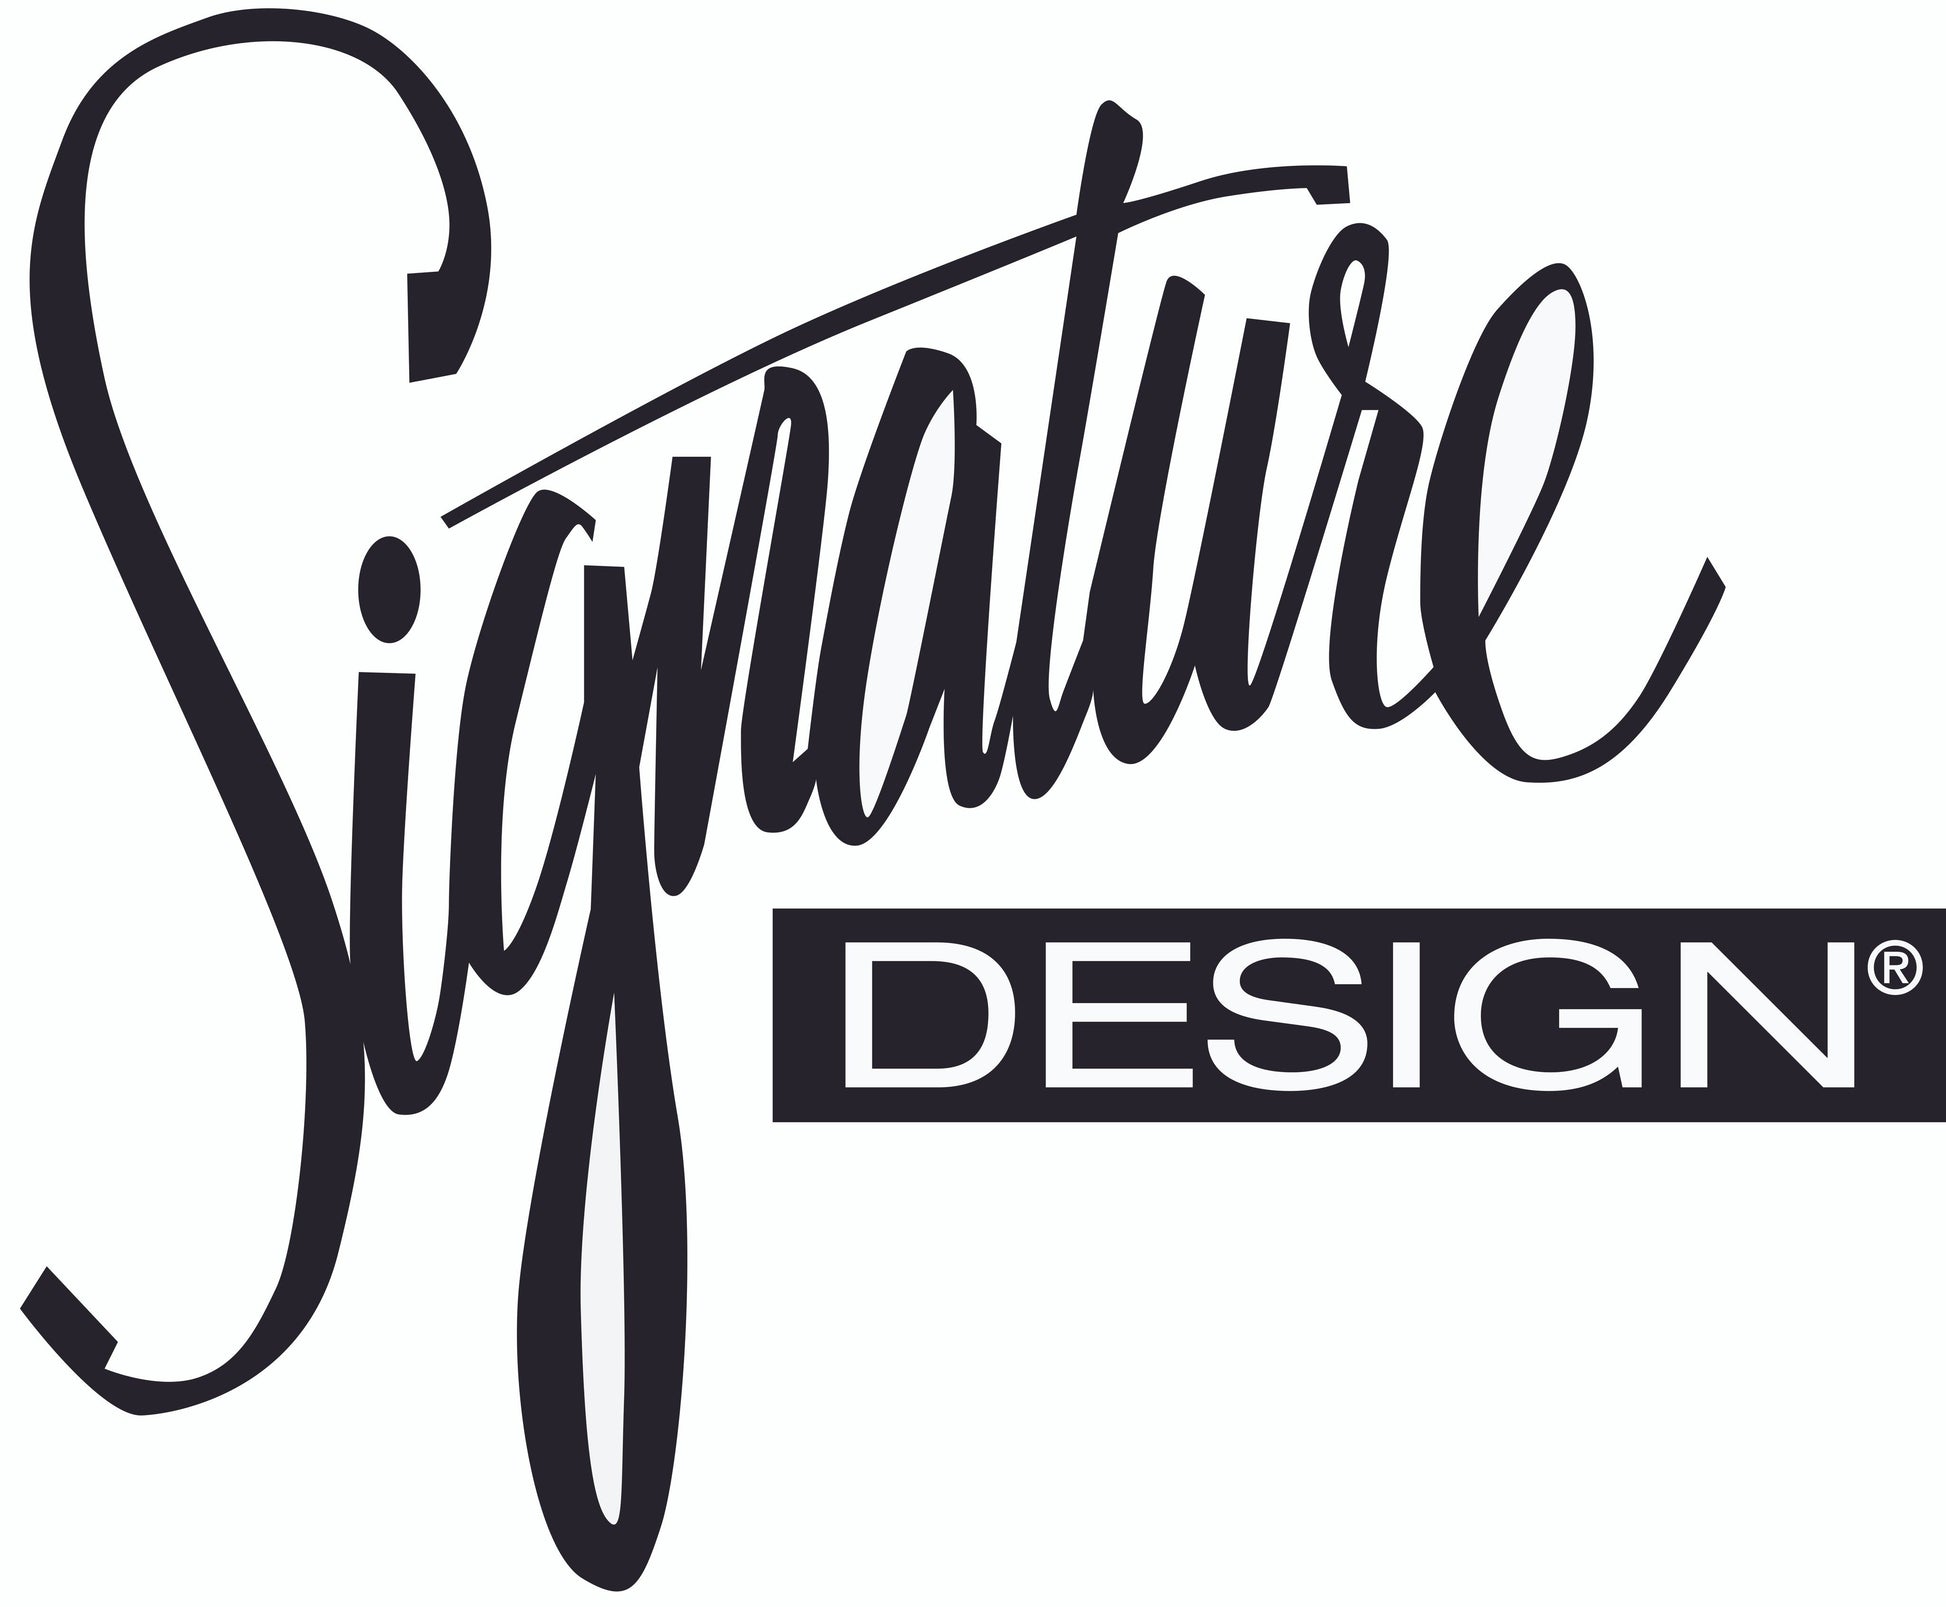 Danziar Dresser and Mirror Signature Design by Ashley®